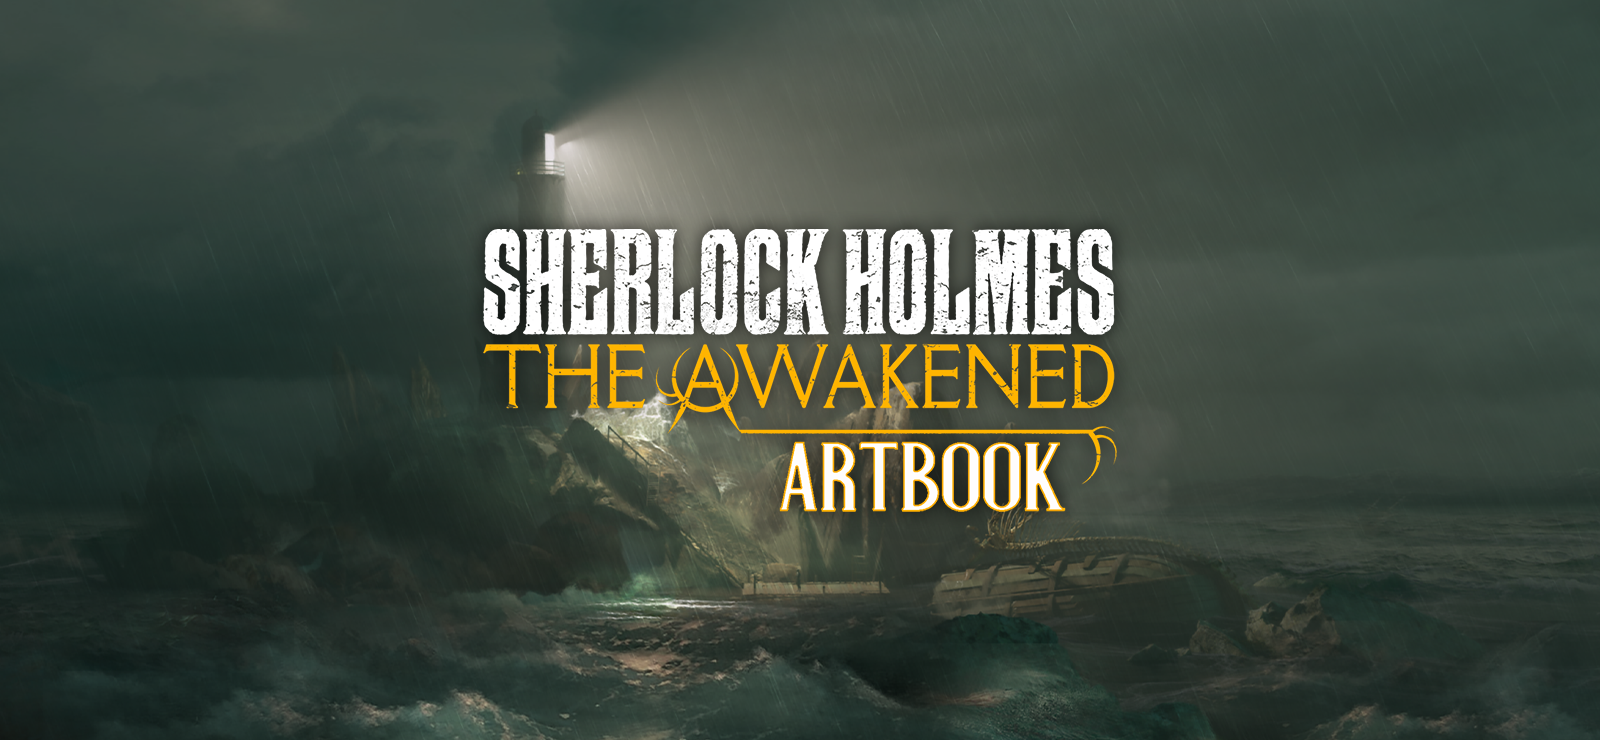 Sherlock Holmes The Awakened - Artbook